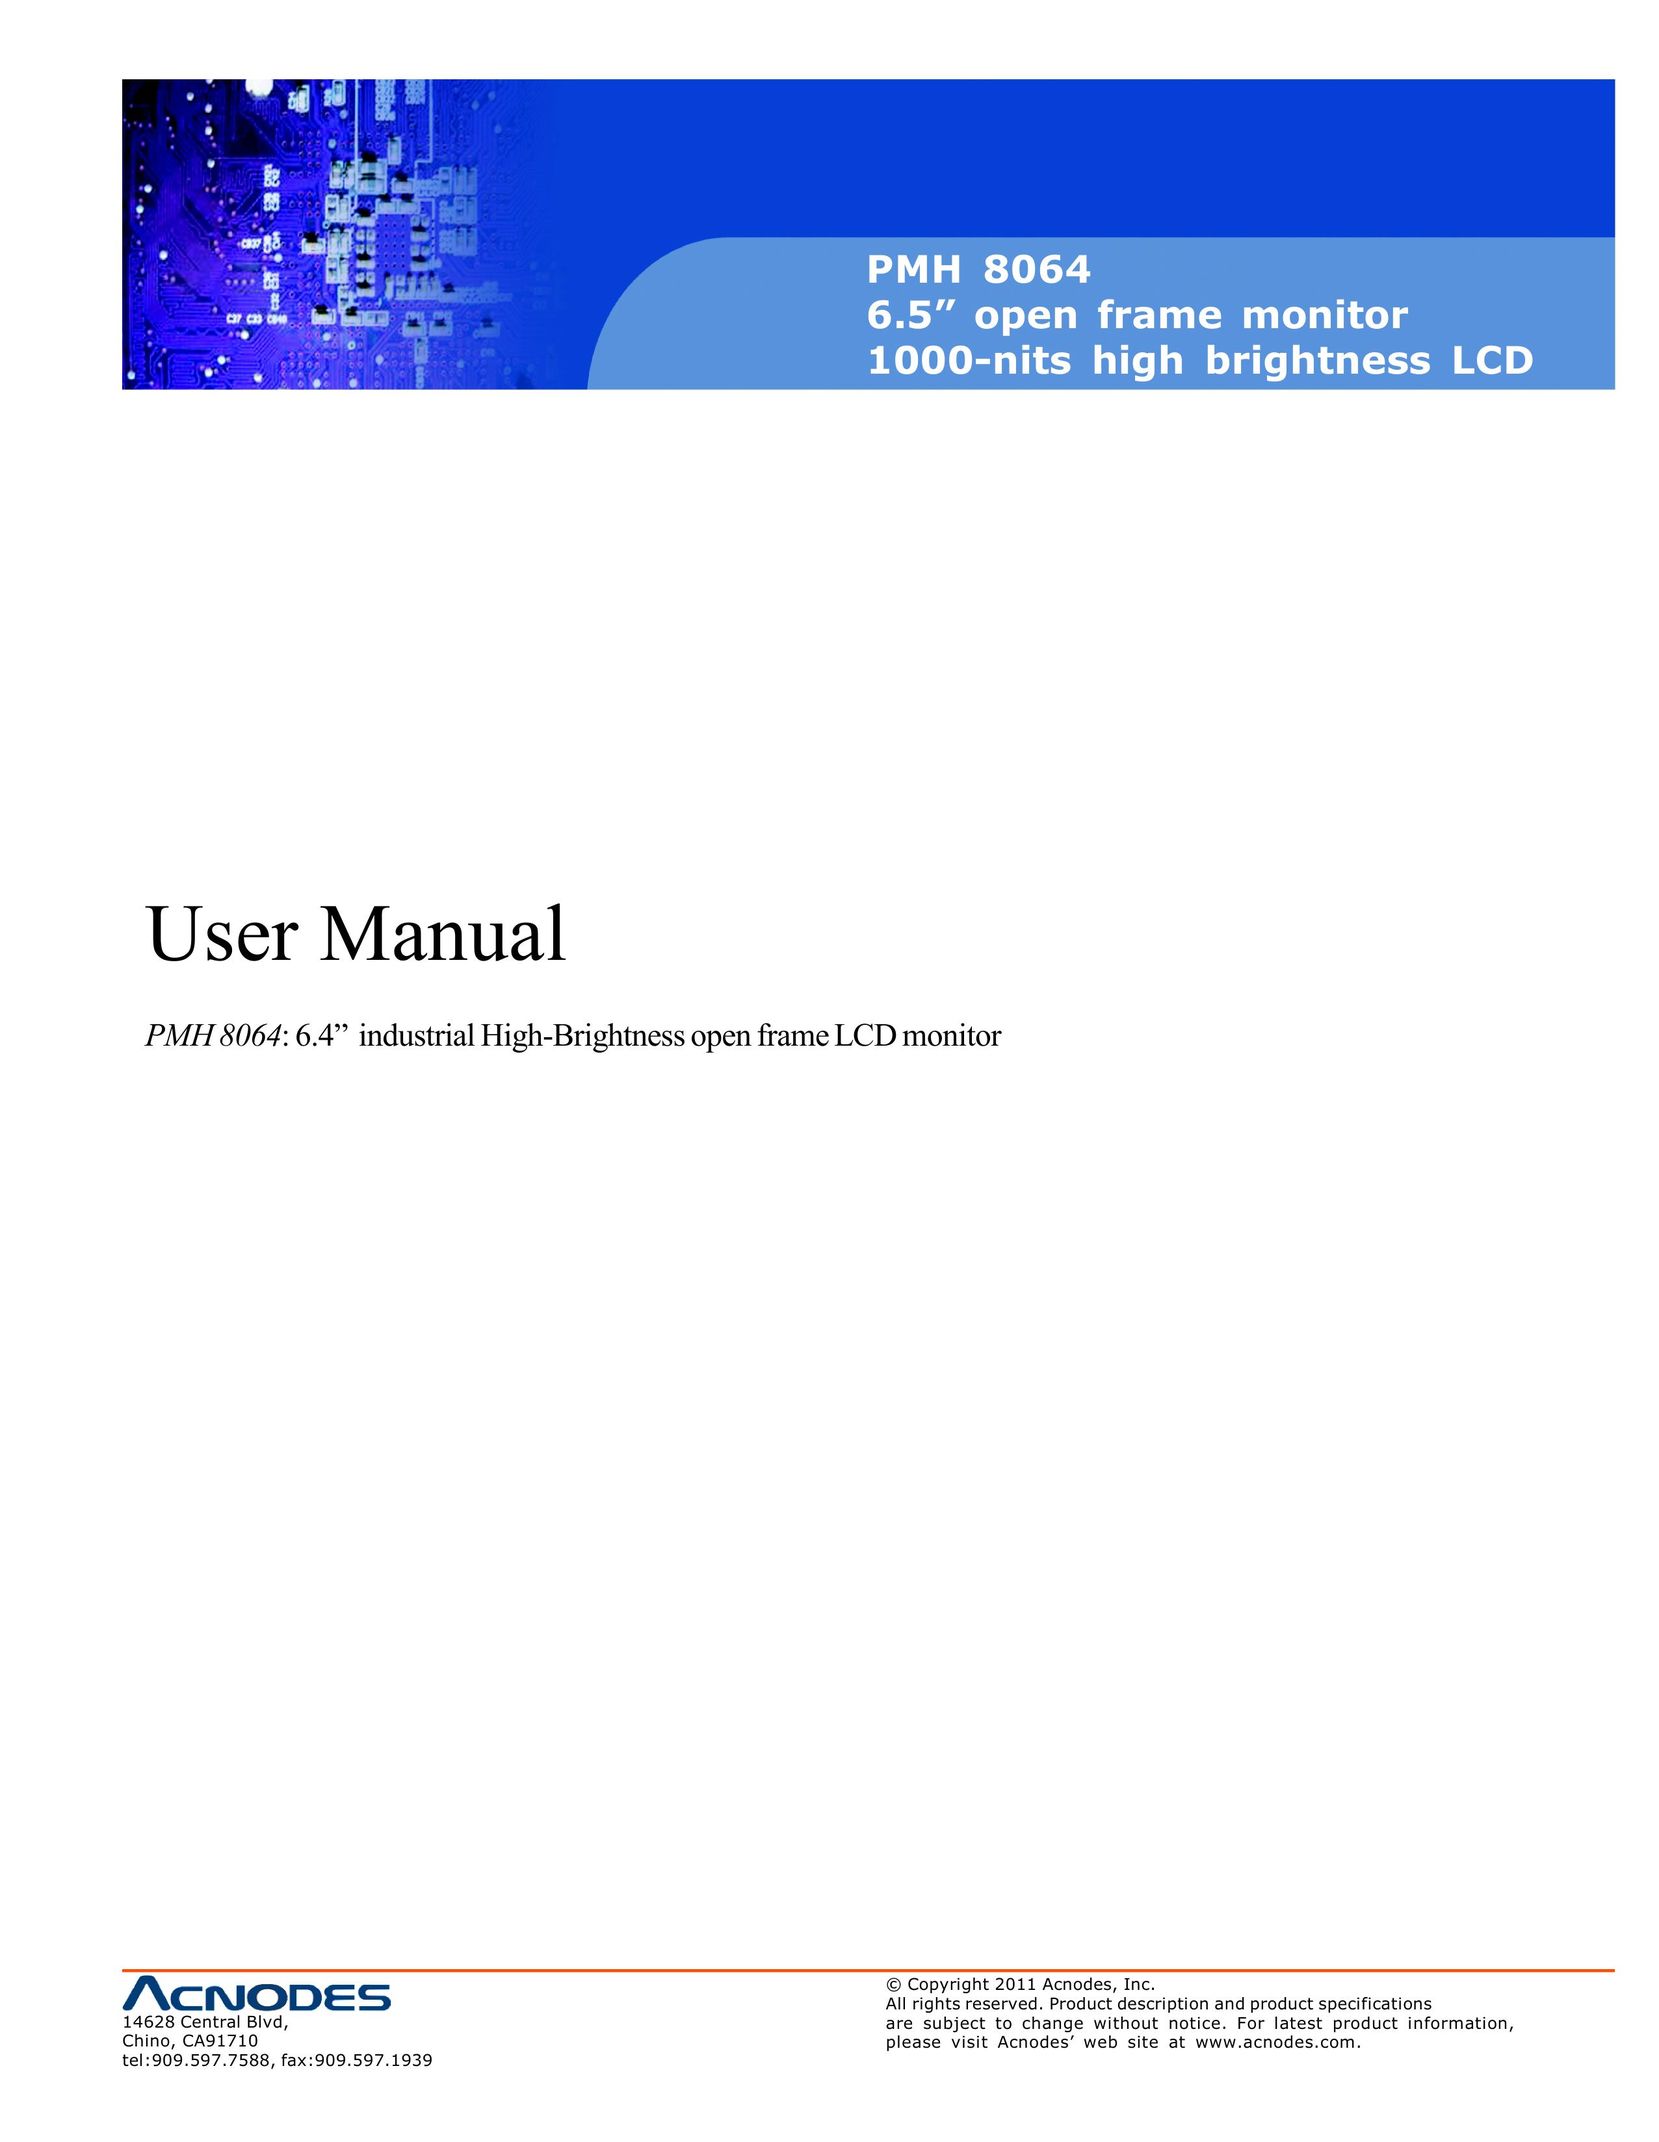 Acnodes PMH 8064 Car Video System User Manual